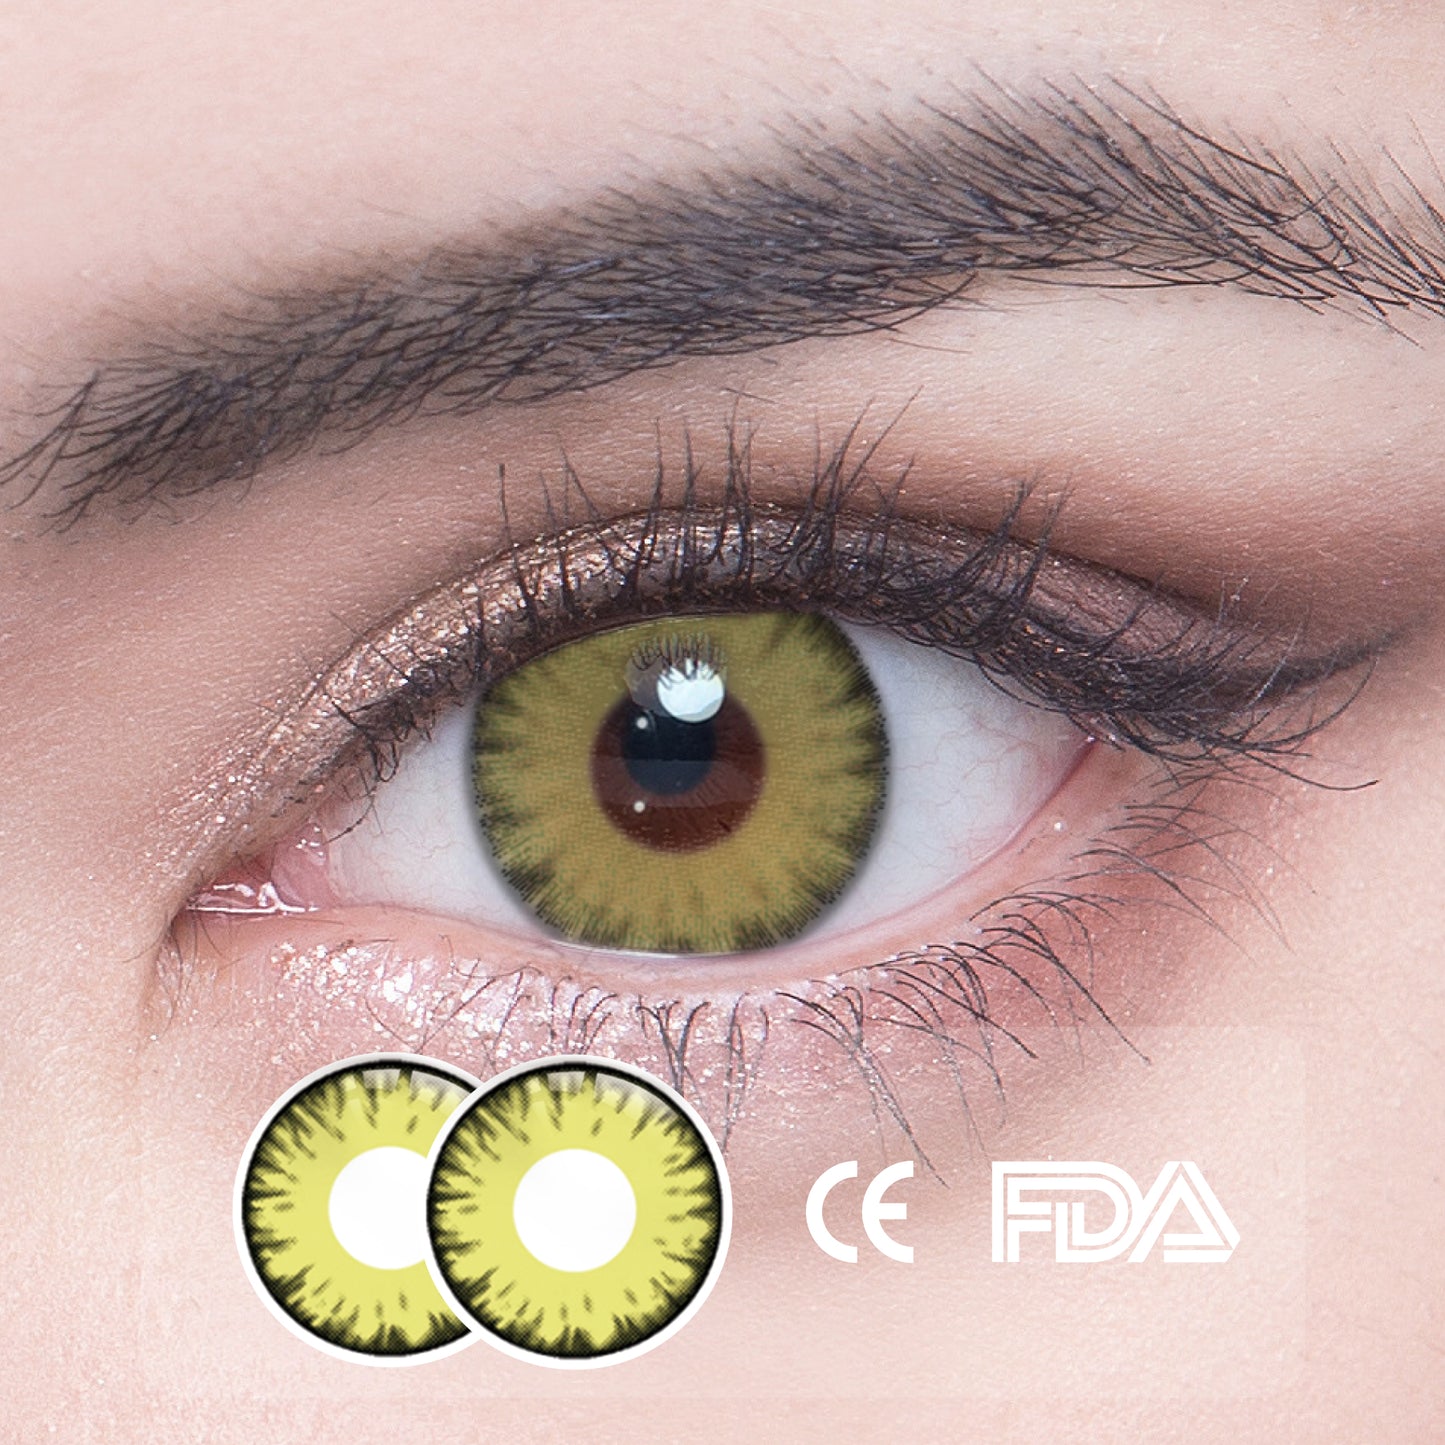 1Pcs FDA Certificate Eyes Contact Lenses - Dazzle orange brown